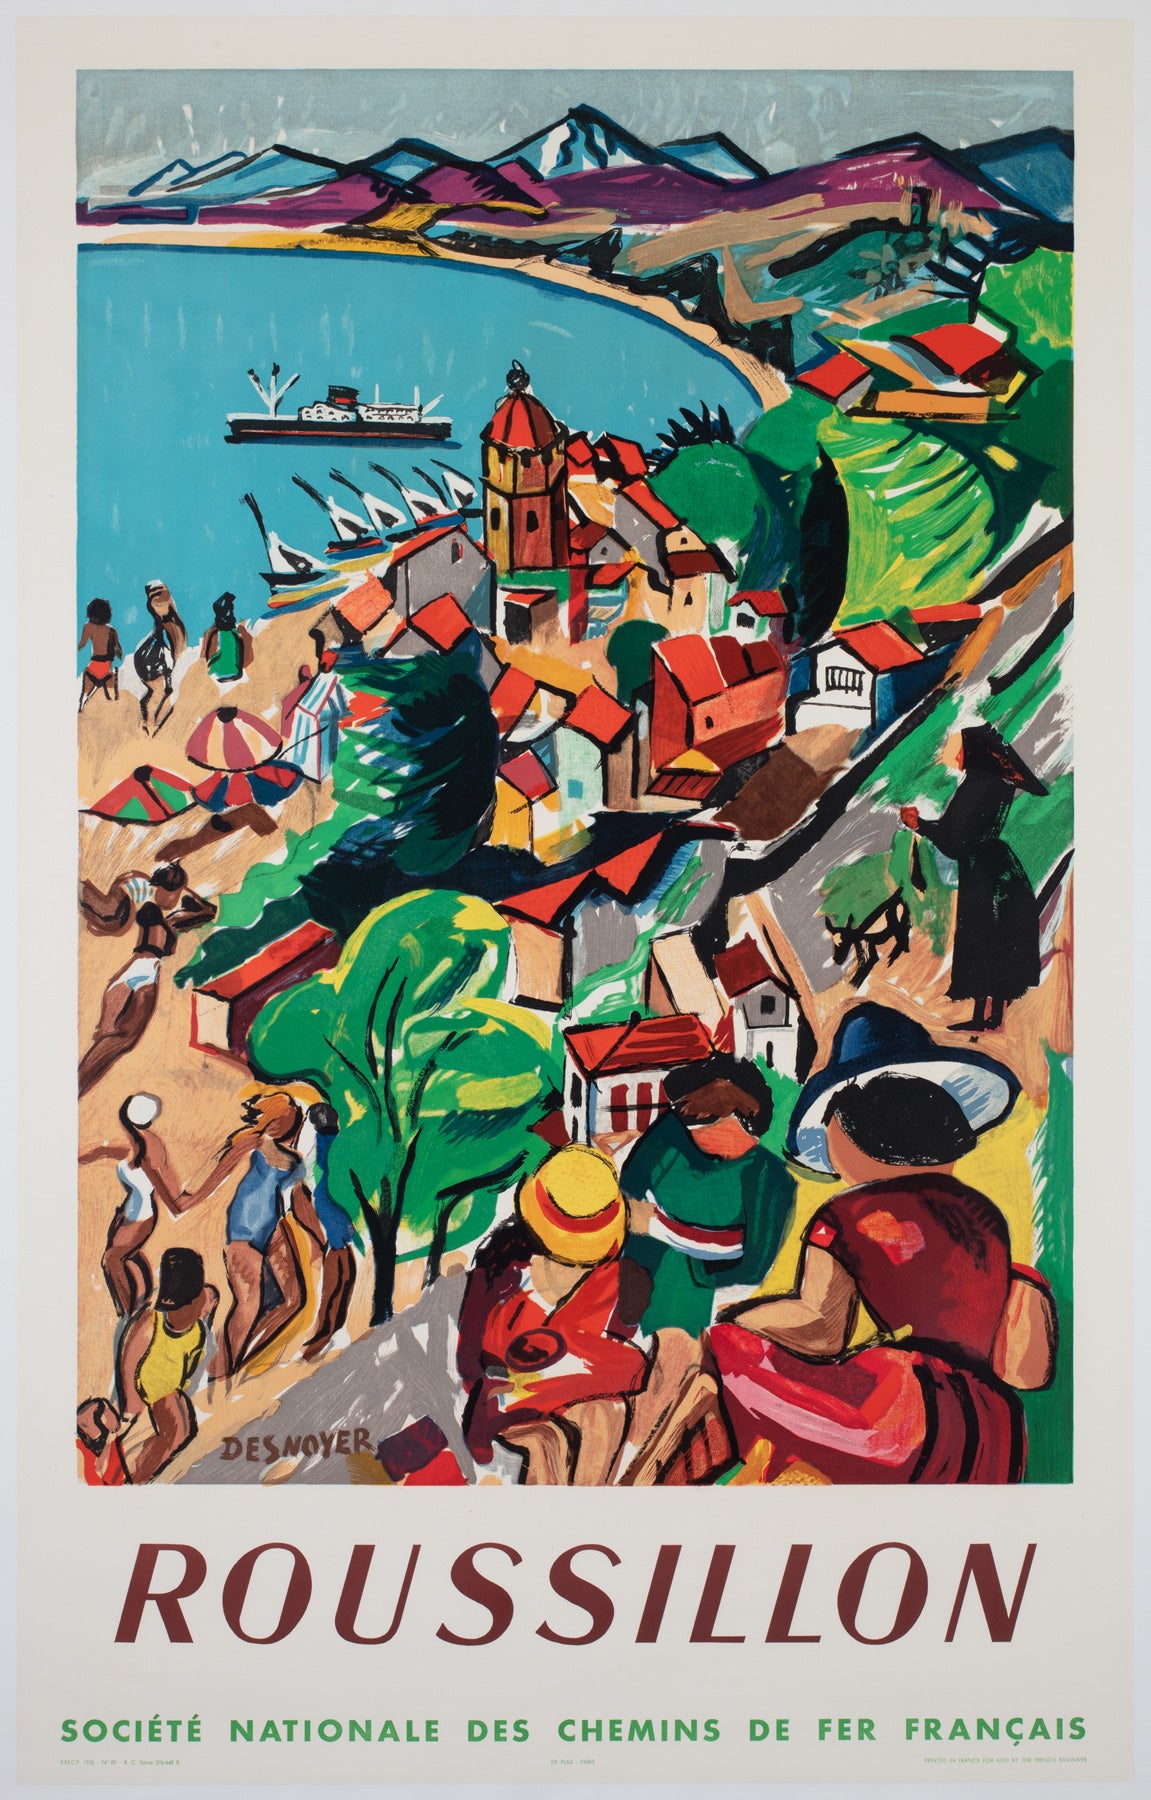 Roussillon 1952 SNCF French Railway Travel Advertising Poster, Francois Desnoyer